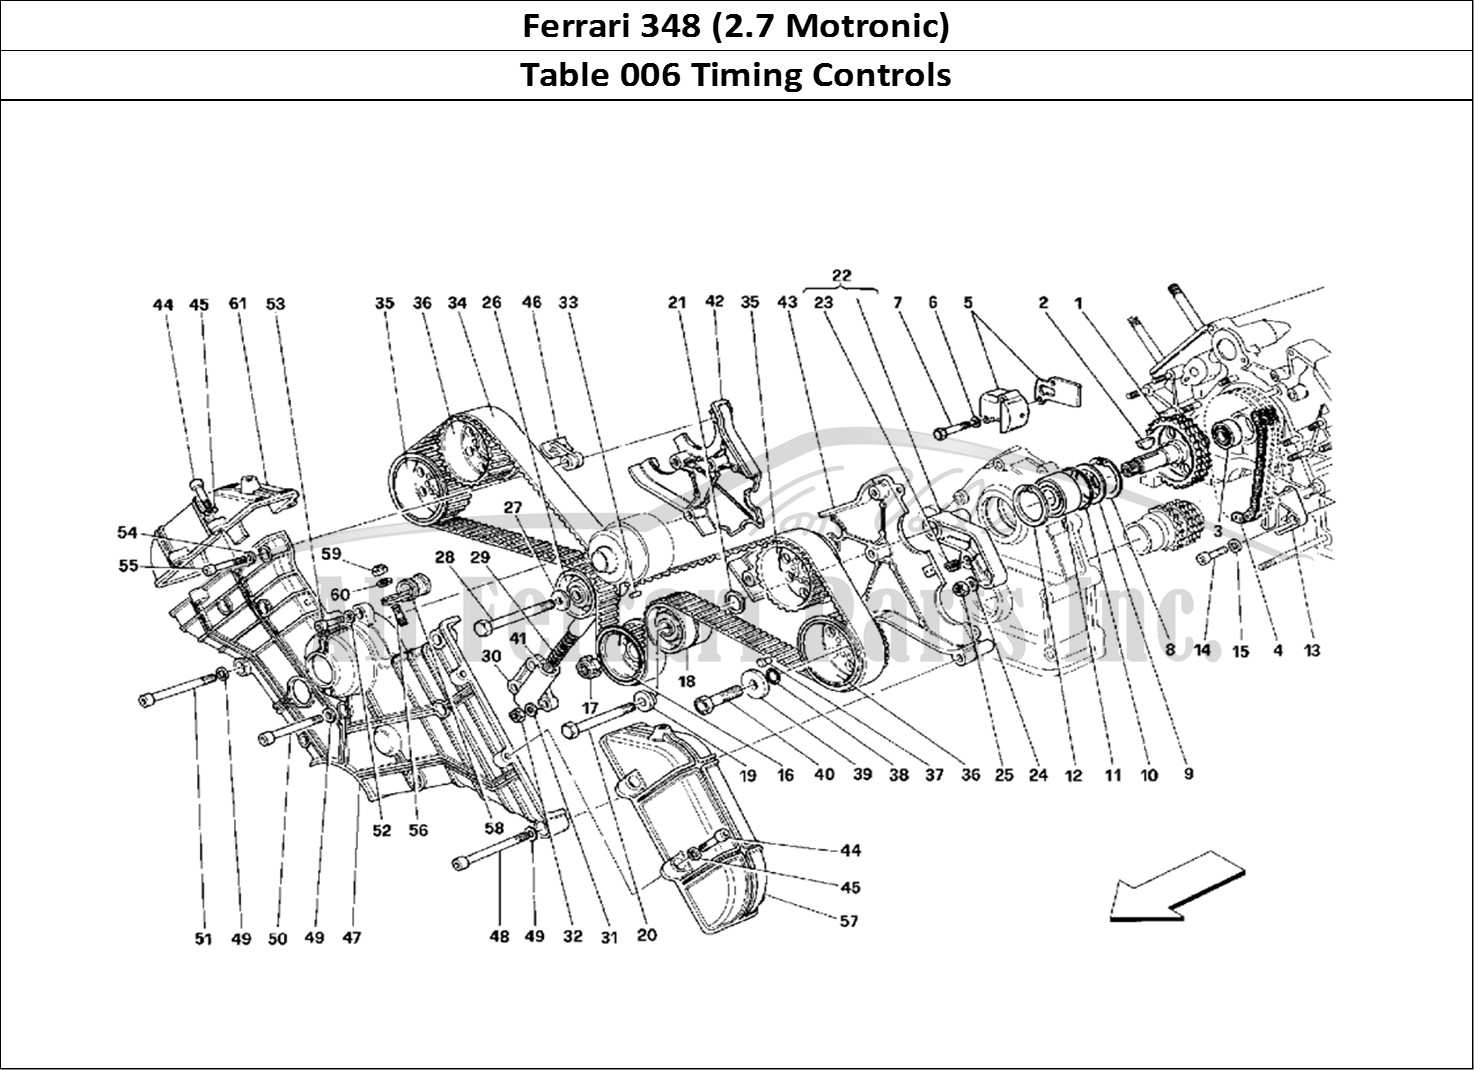 Ferrari Parts Ferrari 348 (2.7 Motronic) Page 006 Timing - Controls